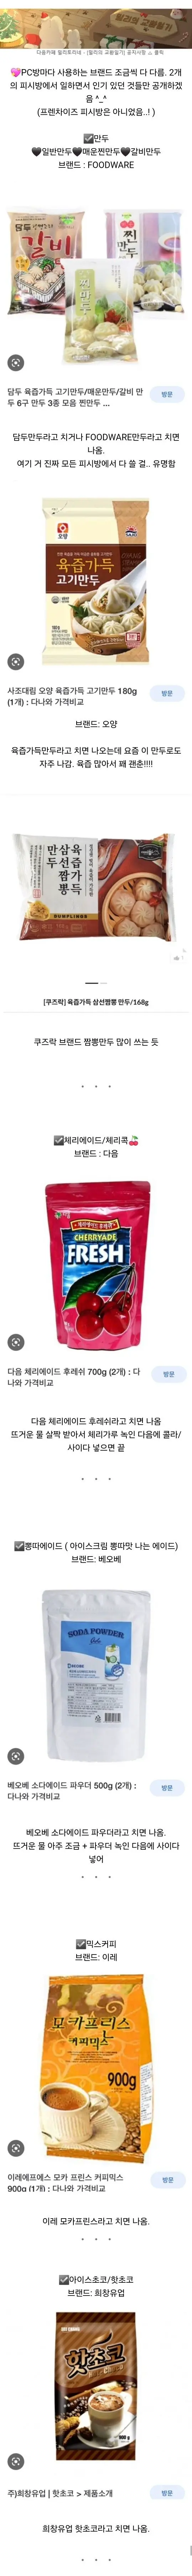 PC방 (전) 알바생이 공개하는 음식 구매처 | mbong.kr 엠봉